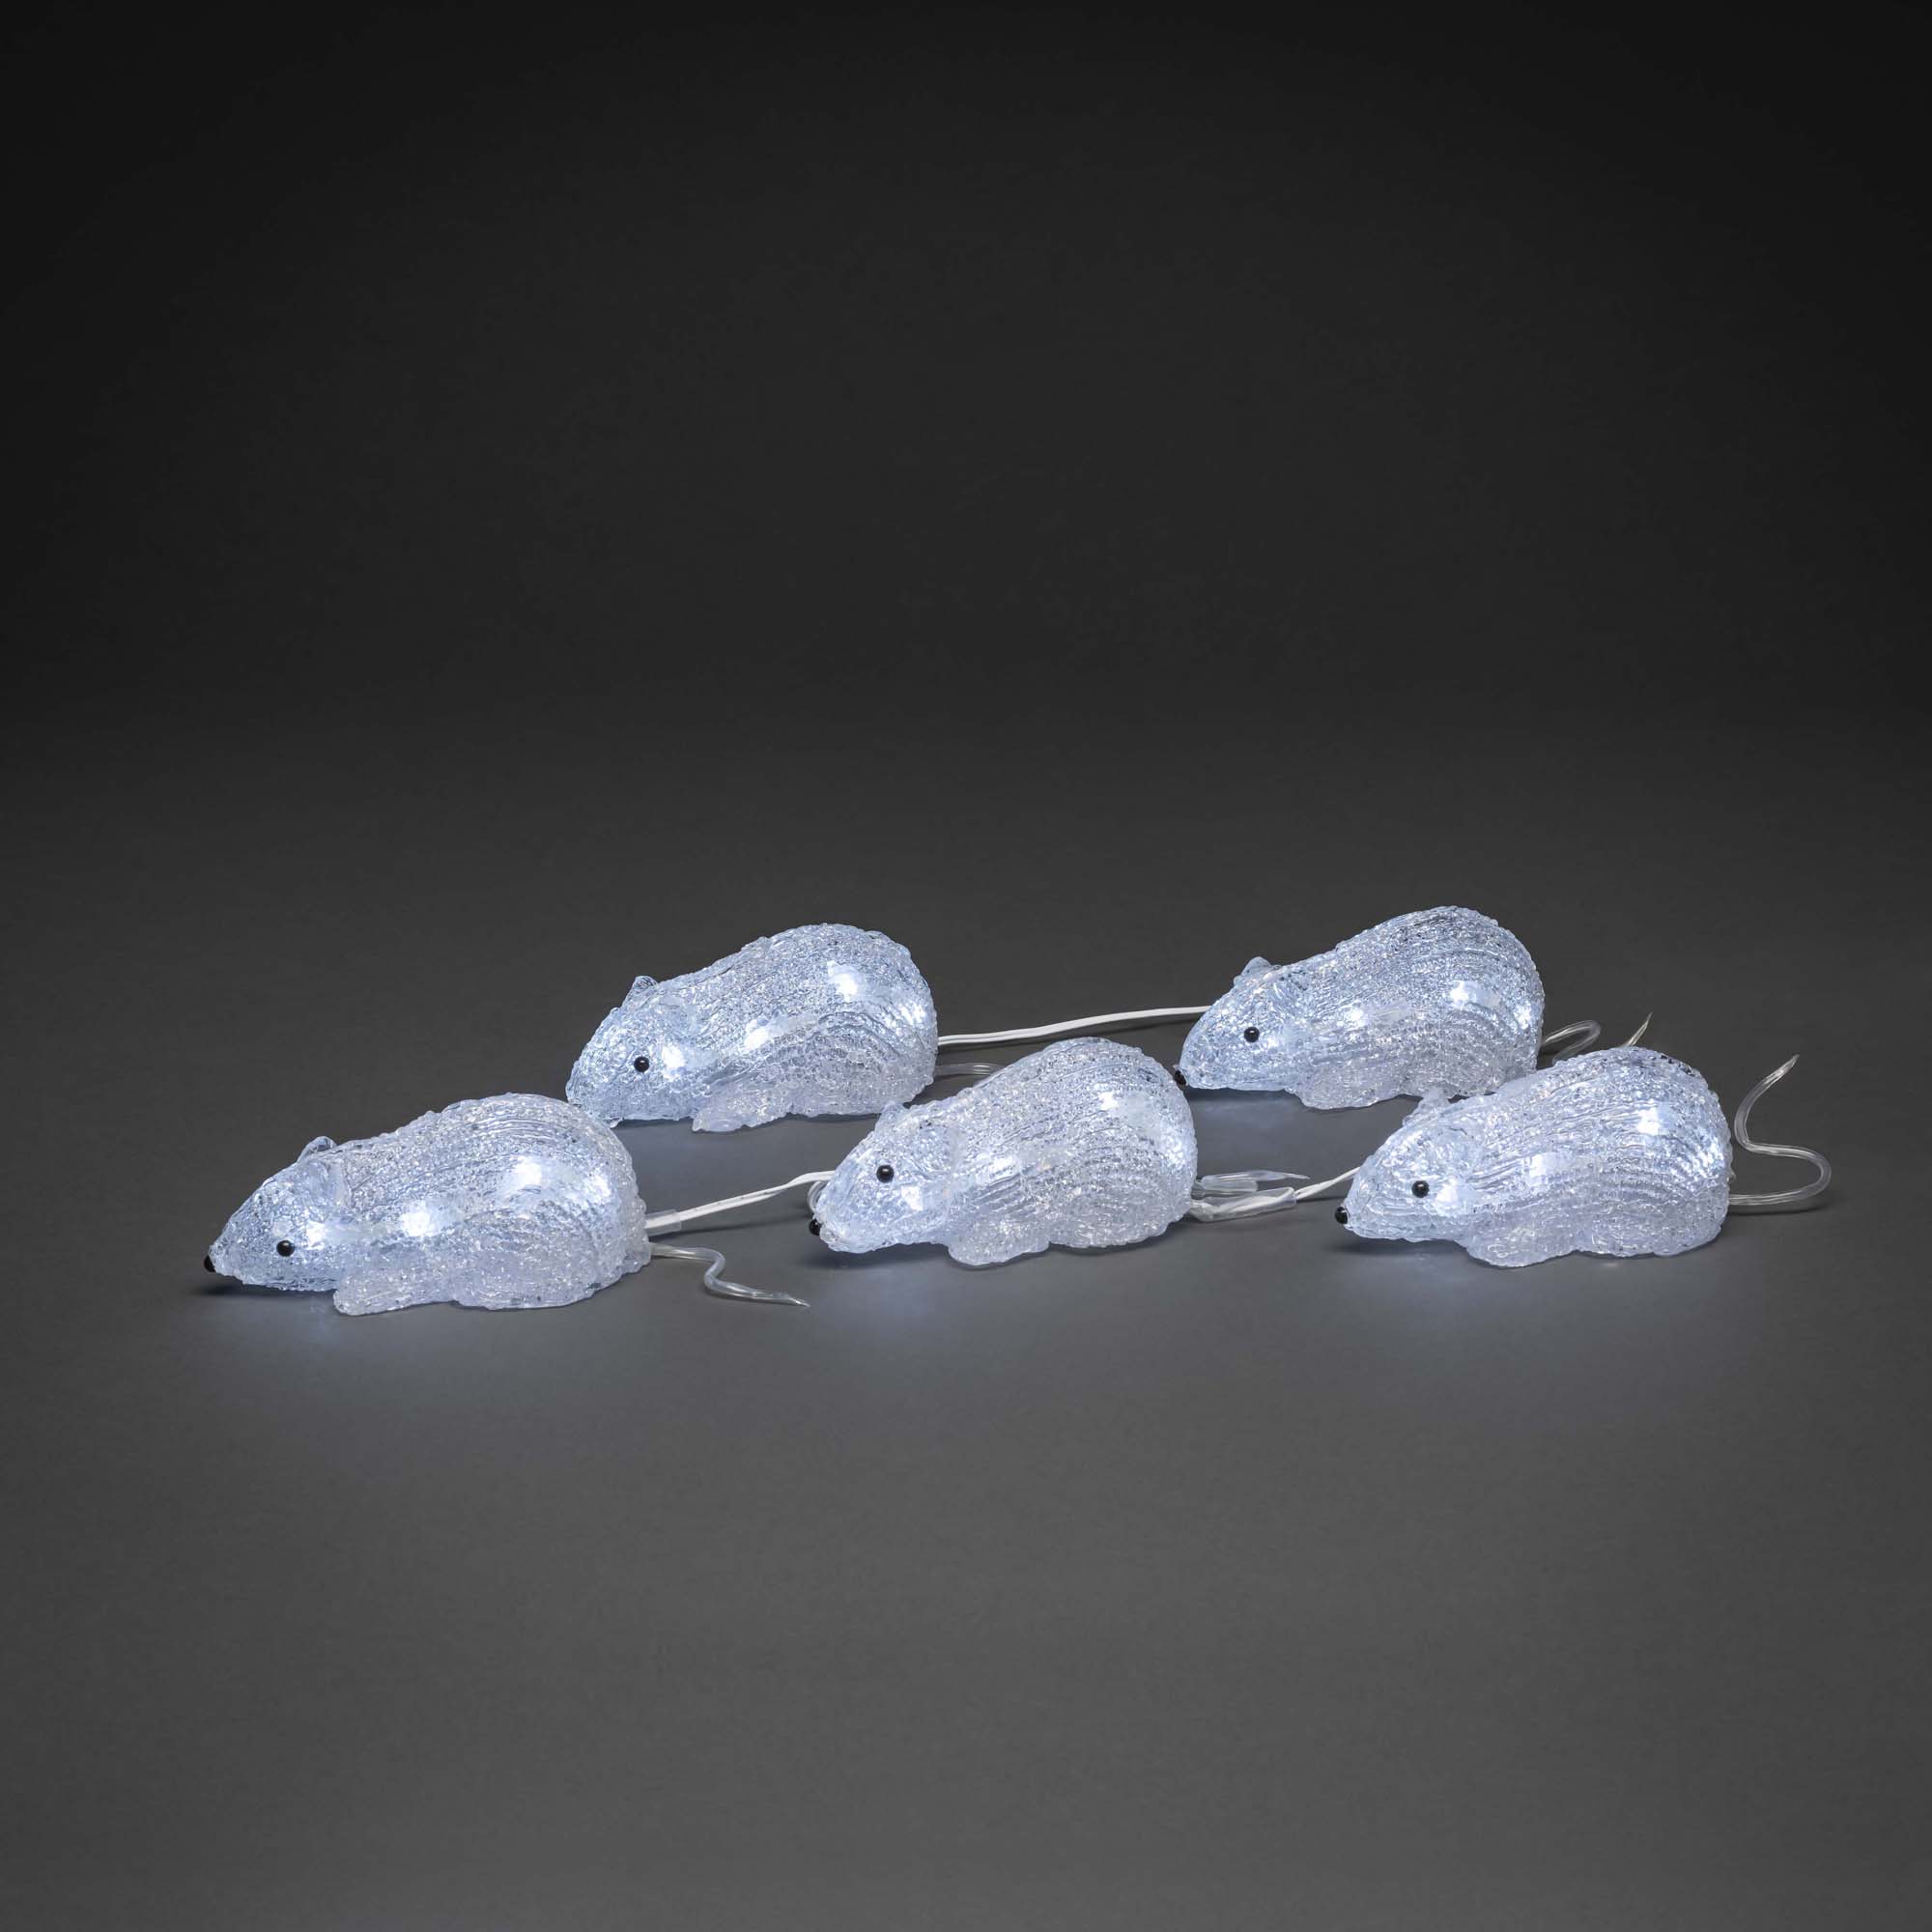 Konstsmide LED Acrylic Mice Set of 5 40 cool white LEDs